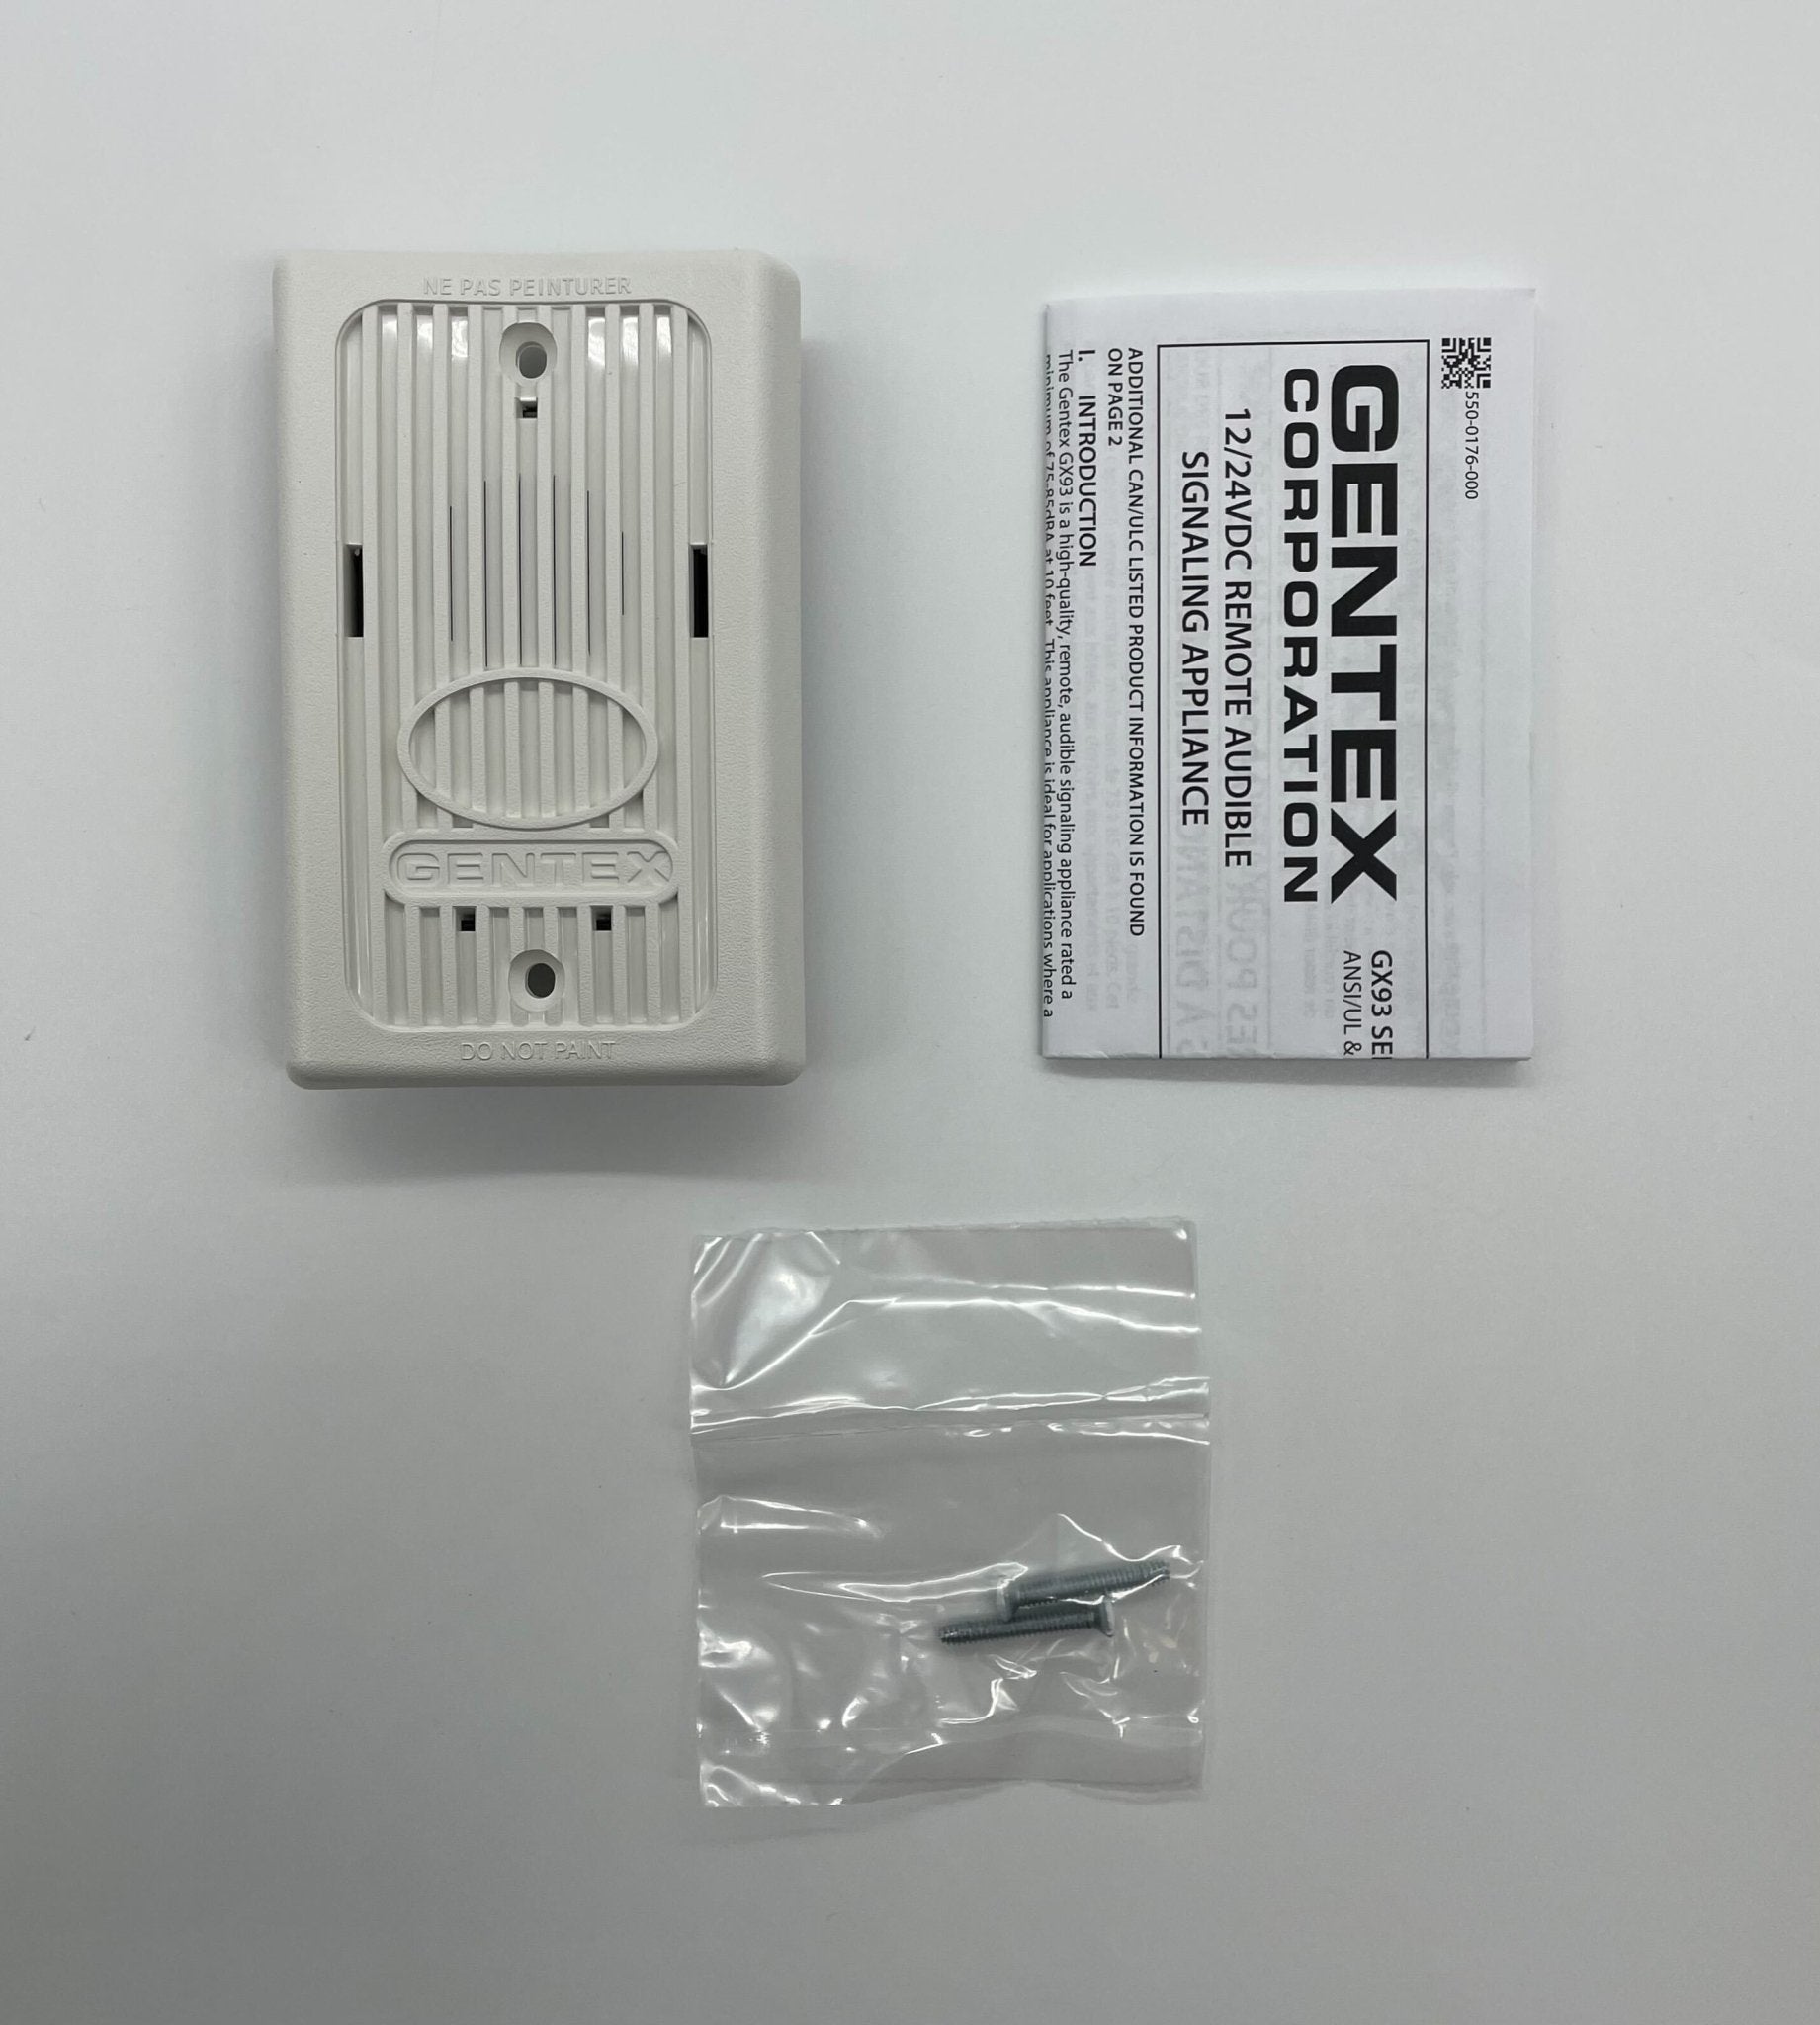 Gentex GX93-PW - The Fire Alarm Supplier